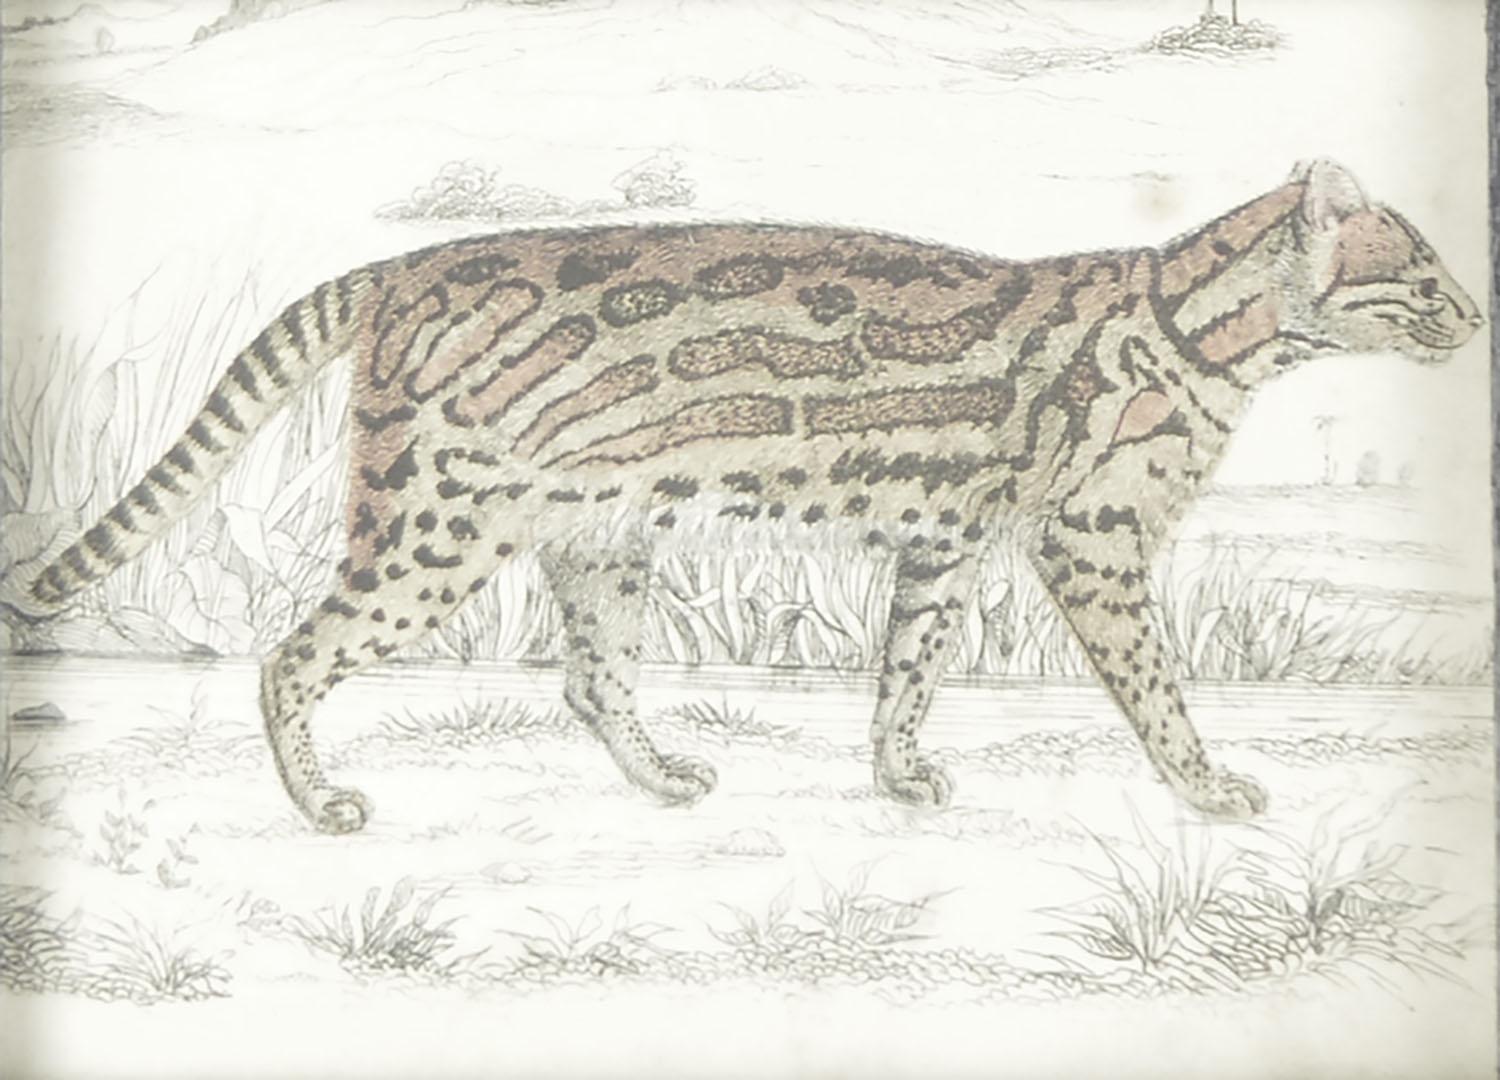 Folk Art Original Antique Print of a Tiger, 1847